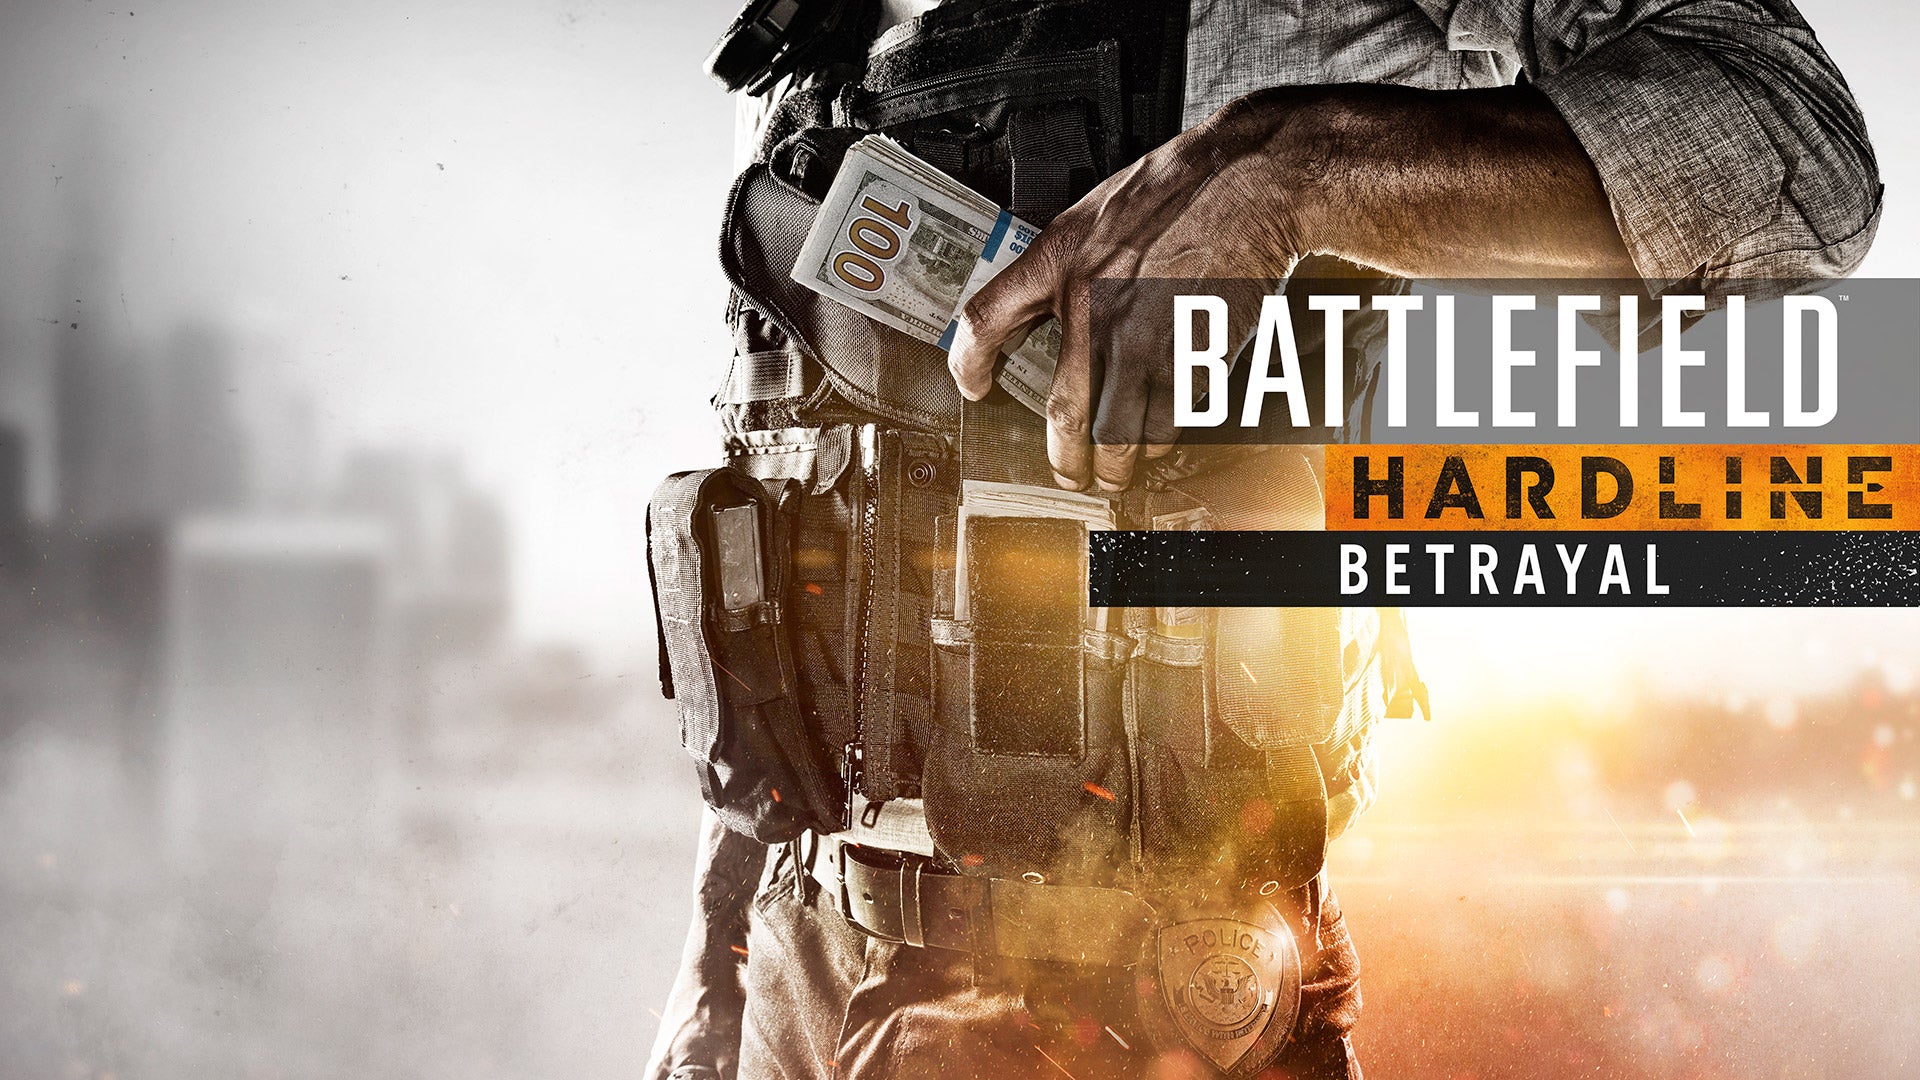 Image for Battlefield Hardline Betrayal DLC gets release date, fan-produced trailer